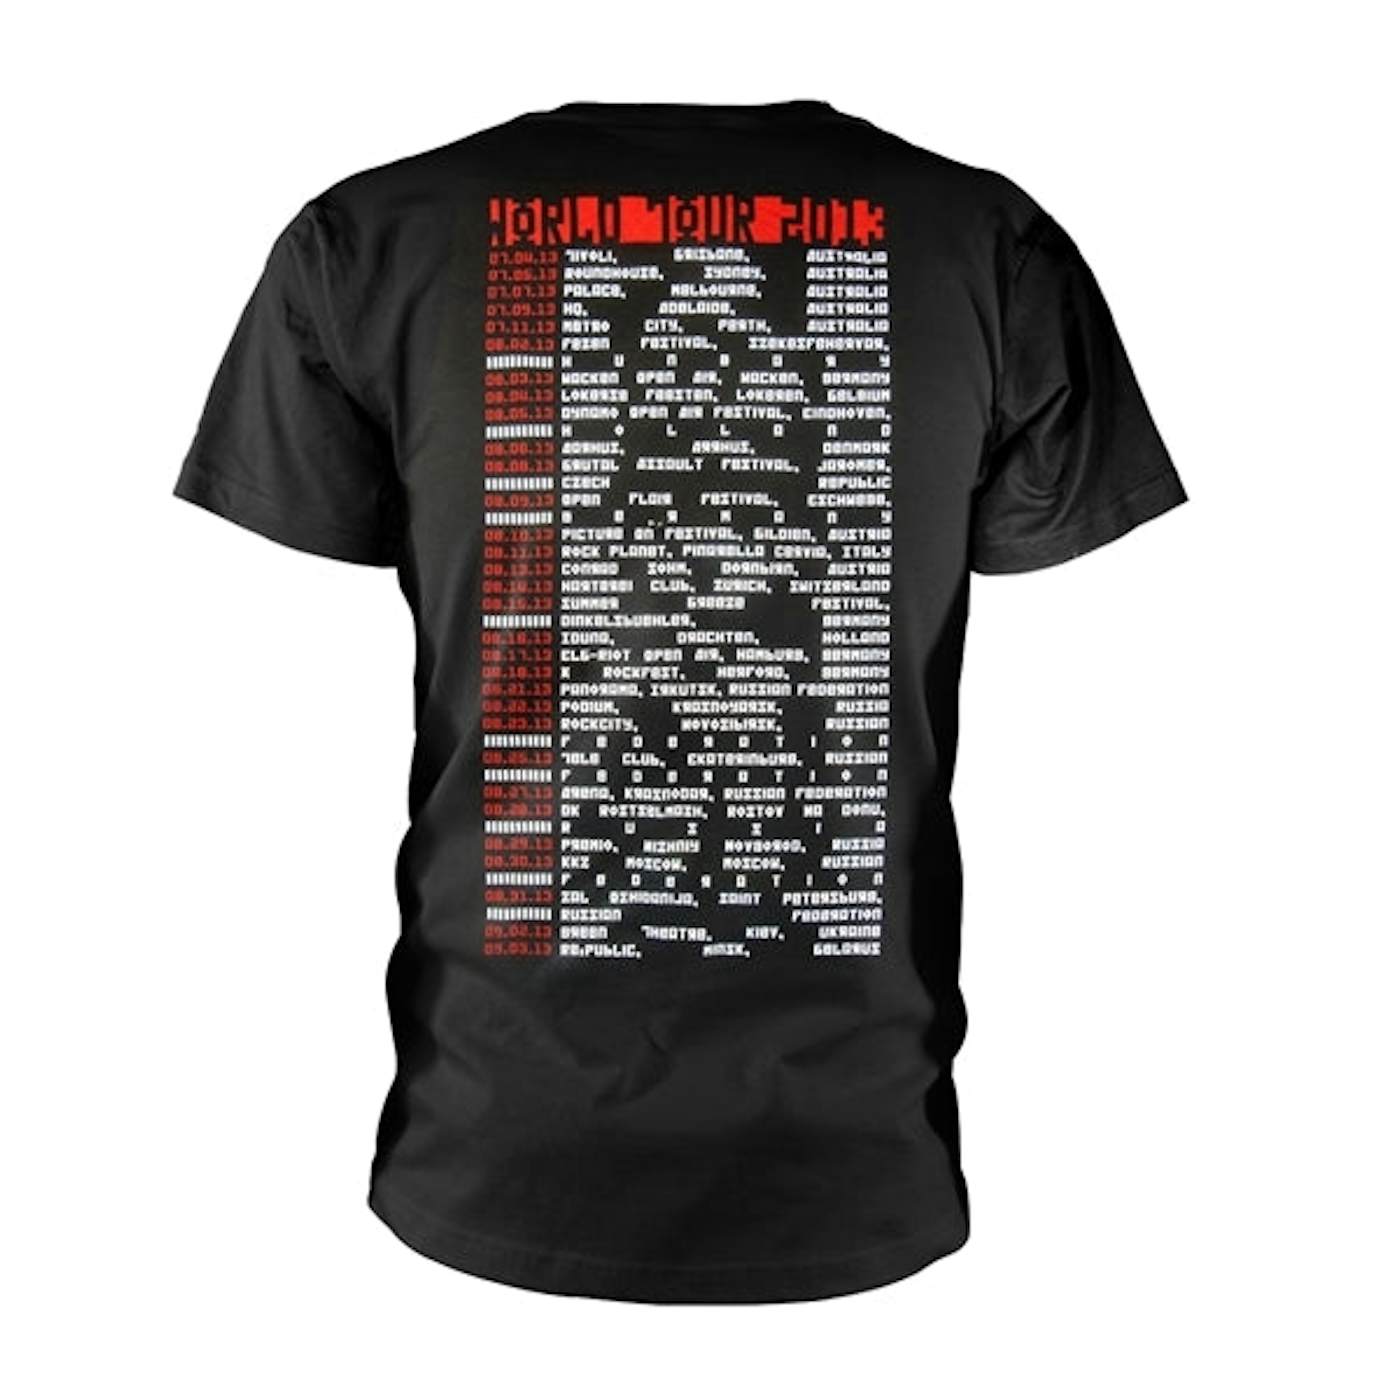 Fear Factory T-Shirt - World Tour 2013 (Tour Stock)